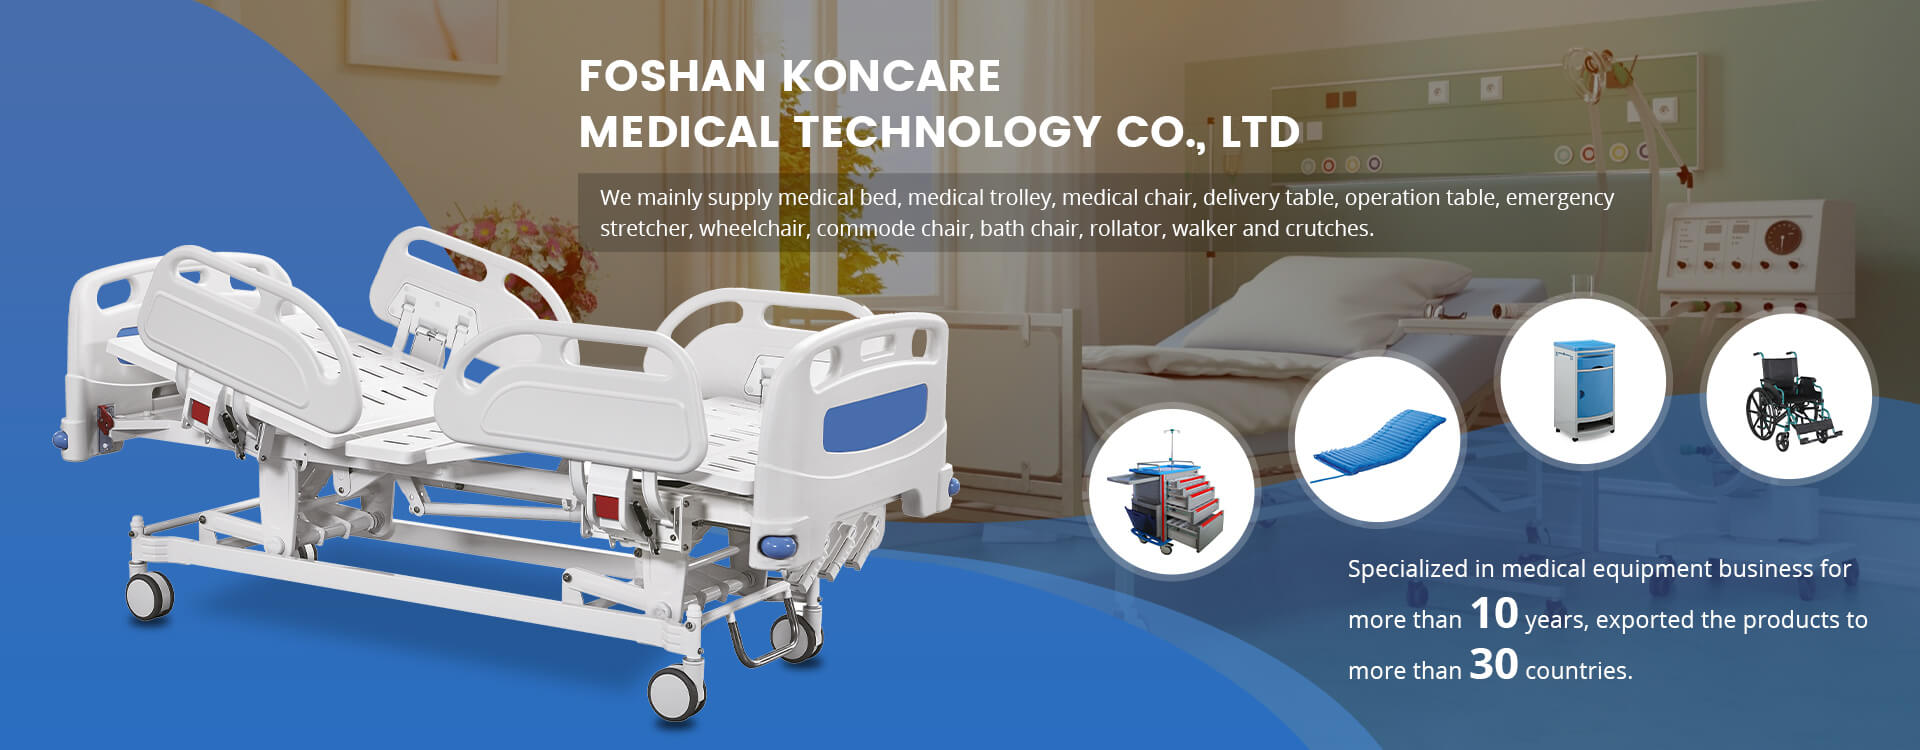 Foshan Koncare Medical Technology Co., Ltd.